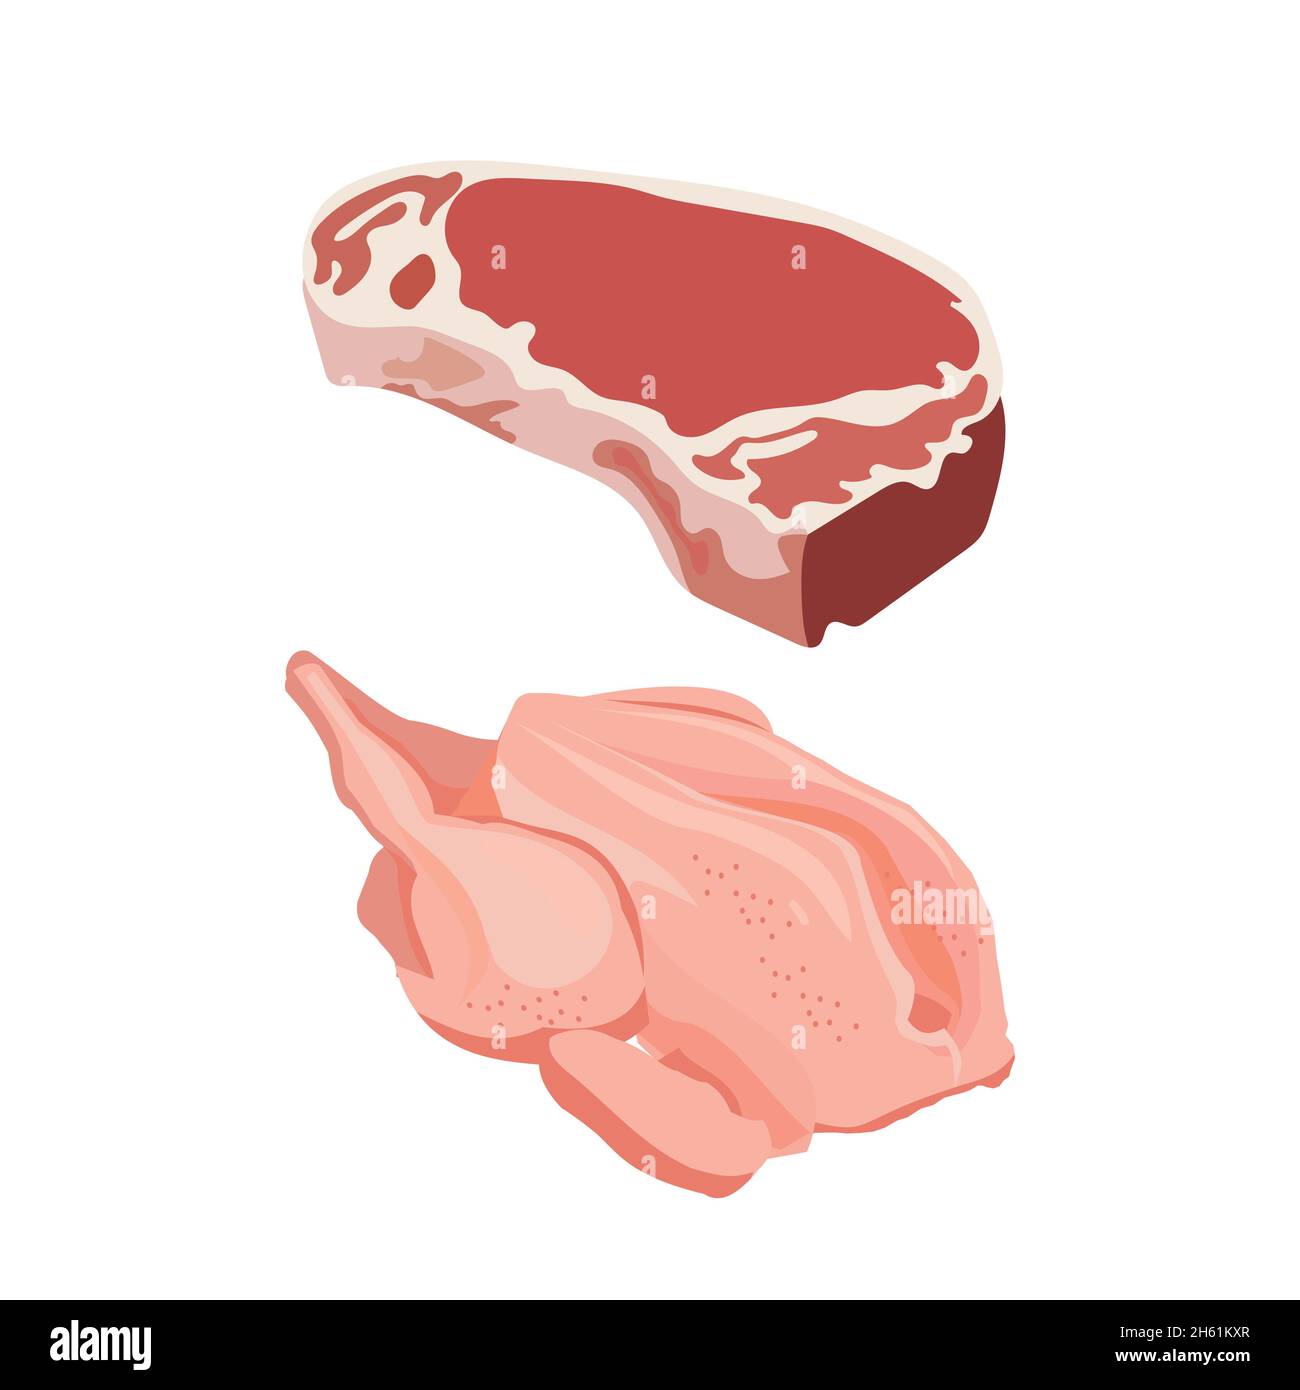 Beef and chicken meat design Stock Vector